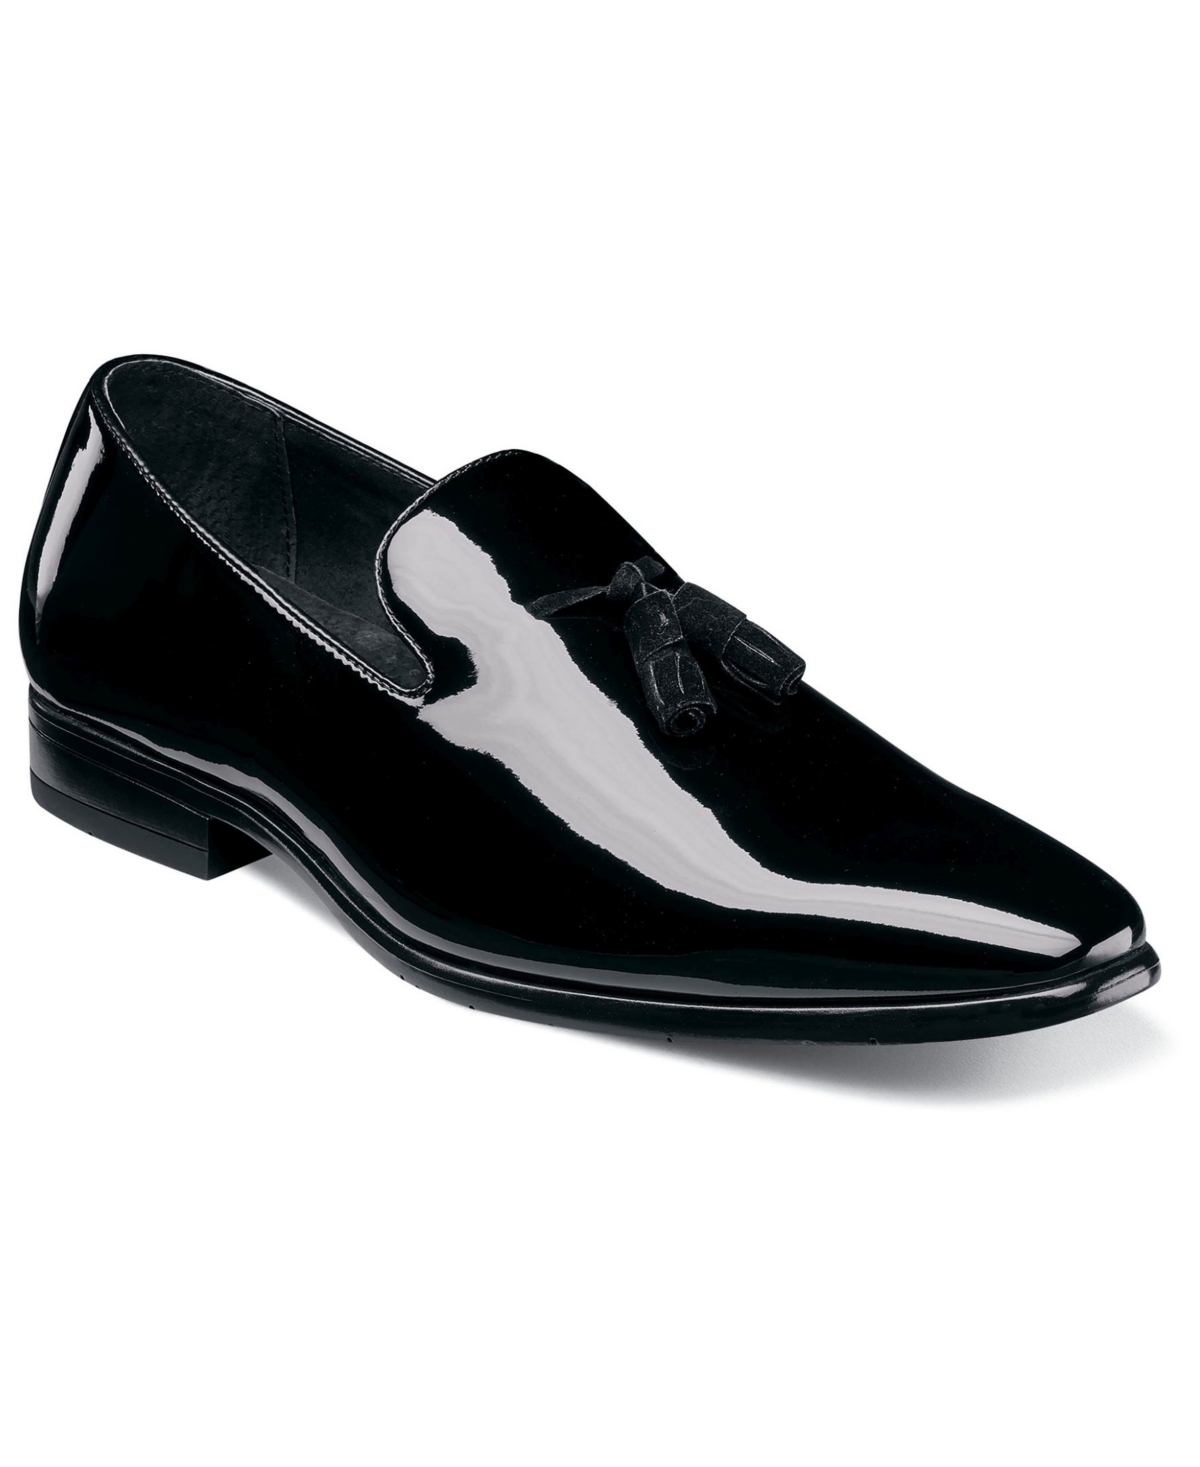 Men's Phoenix Patent Leather Slip-on Loafer - Black Patent